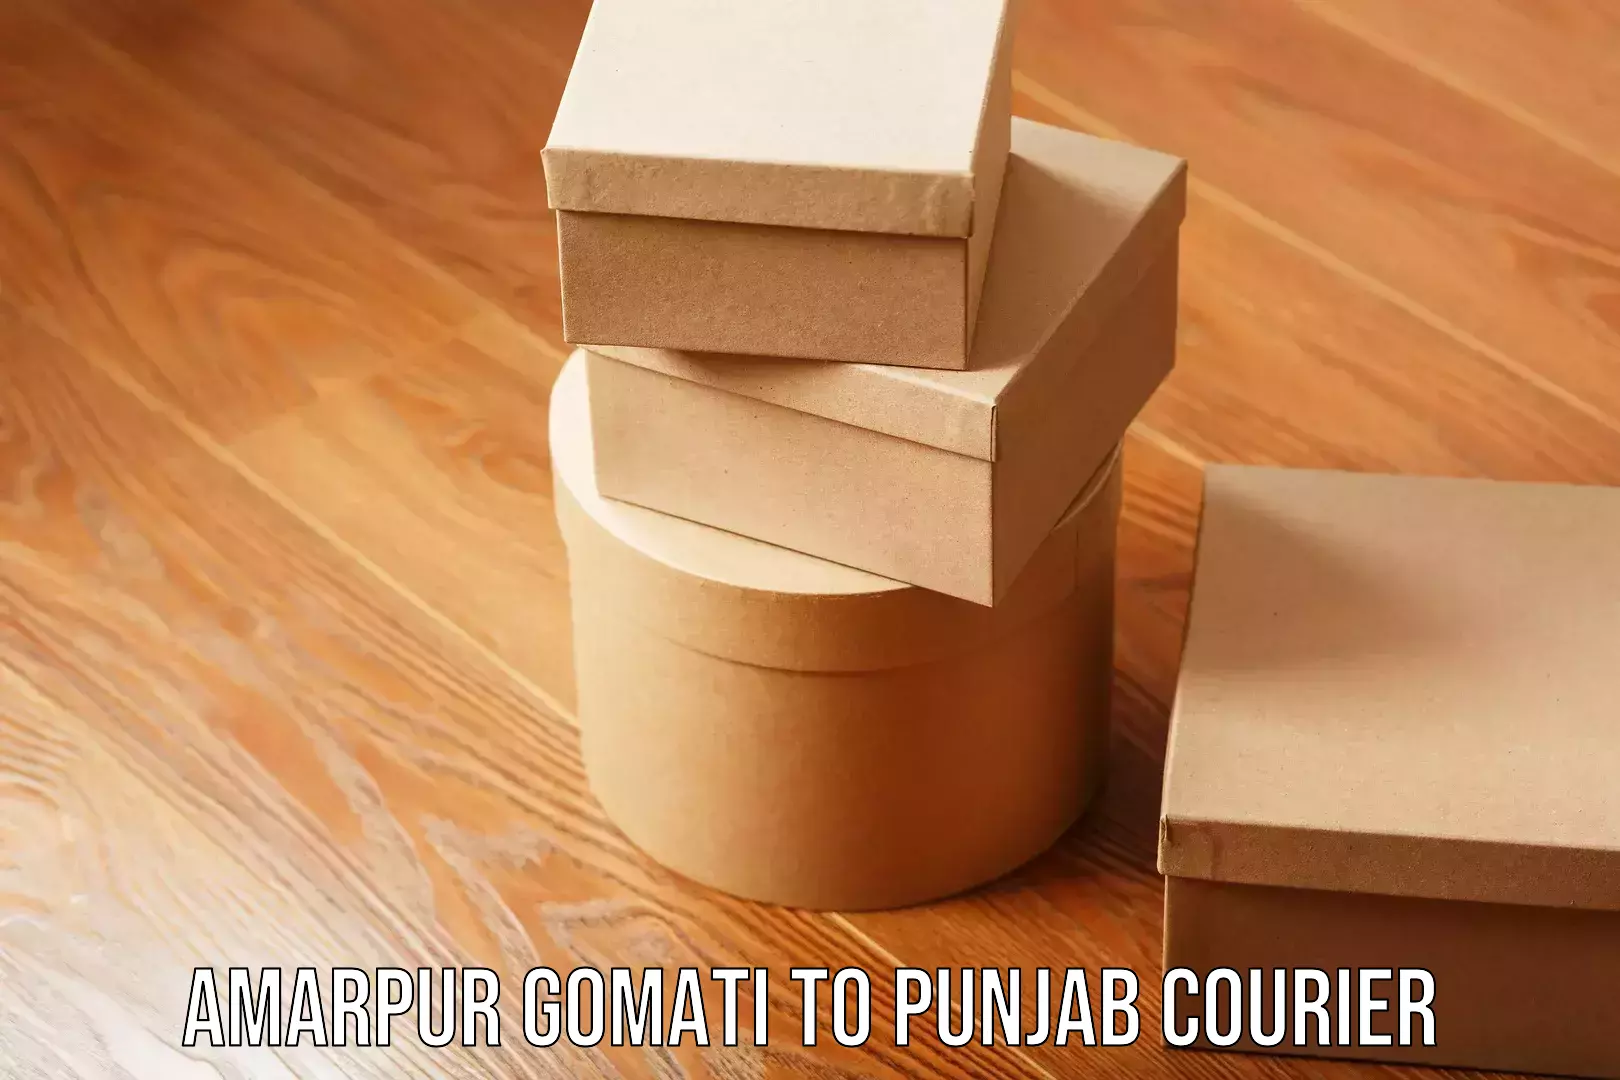 Reliable logistics providers Amarpur Gomati to Punjab